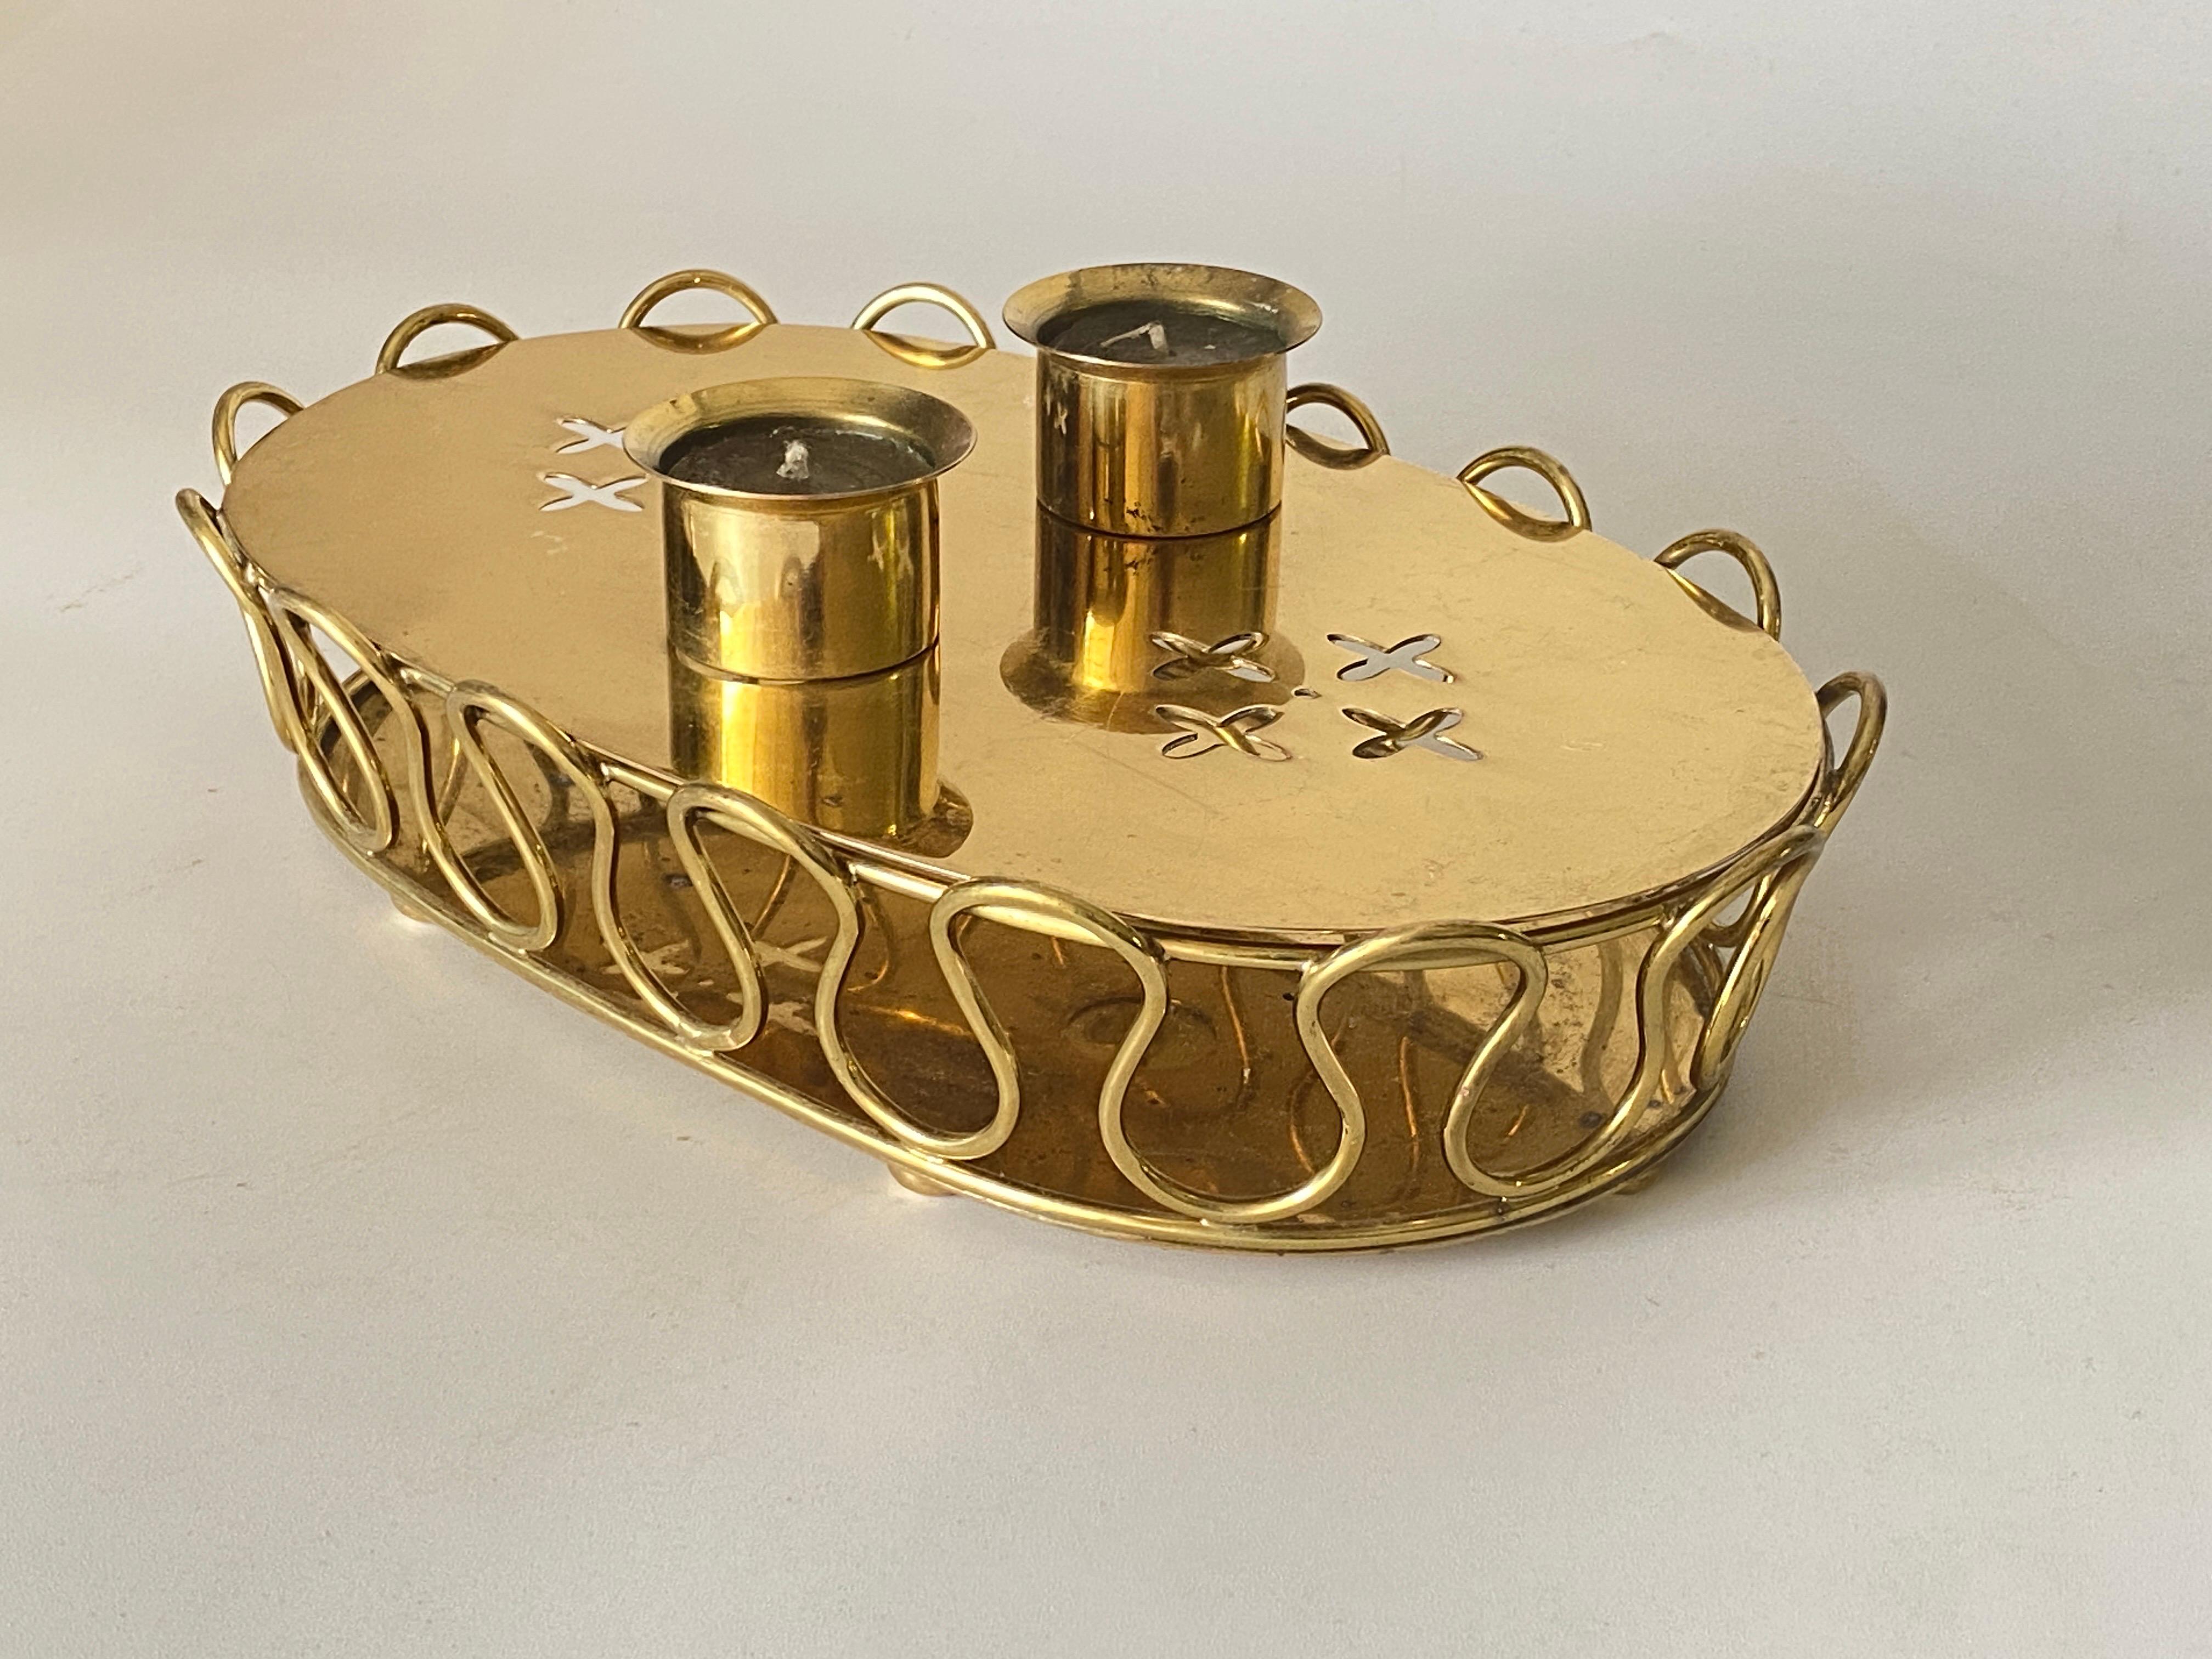 Platter in Brass, Candle Holder, Gold Color, by Josef Frank, 1940 For Sale 4